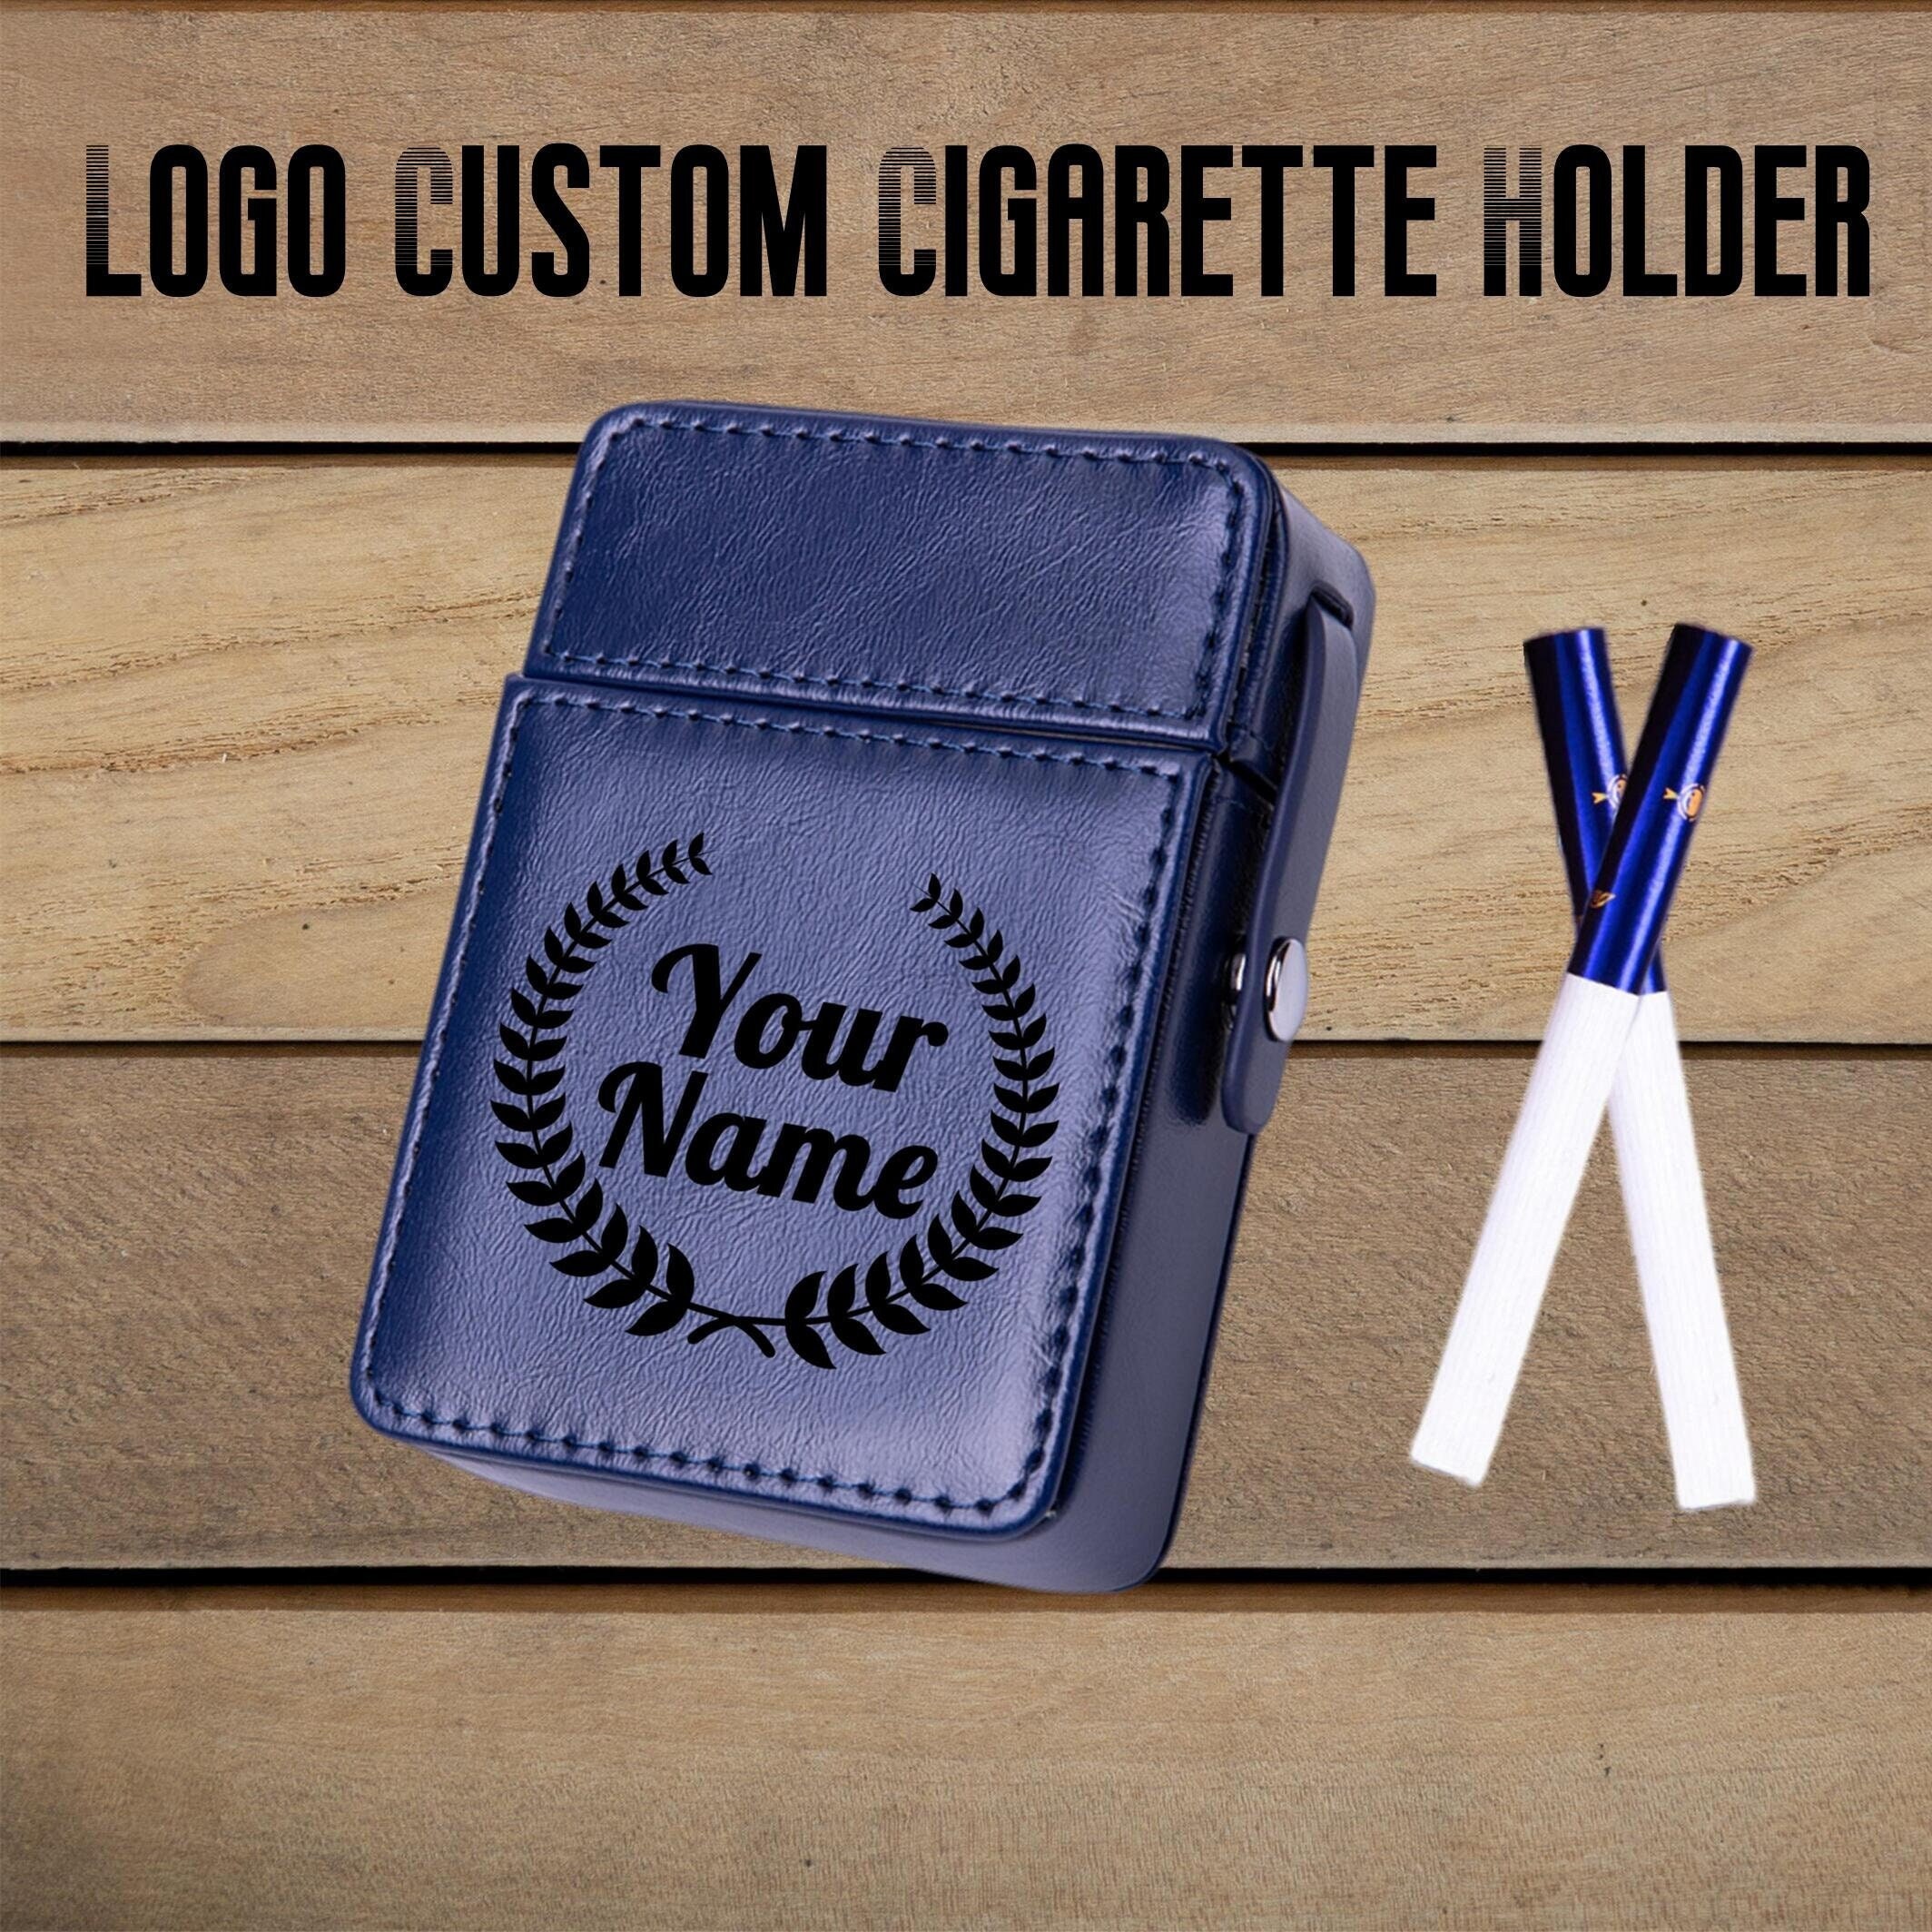 Retro Cigarette Case Metal Holder, PU Leather Cigarette Case Box, 20  Capacity Pressure Resistant Flip Type : : Fashion